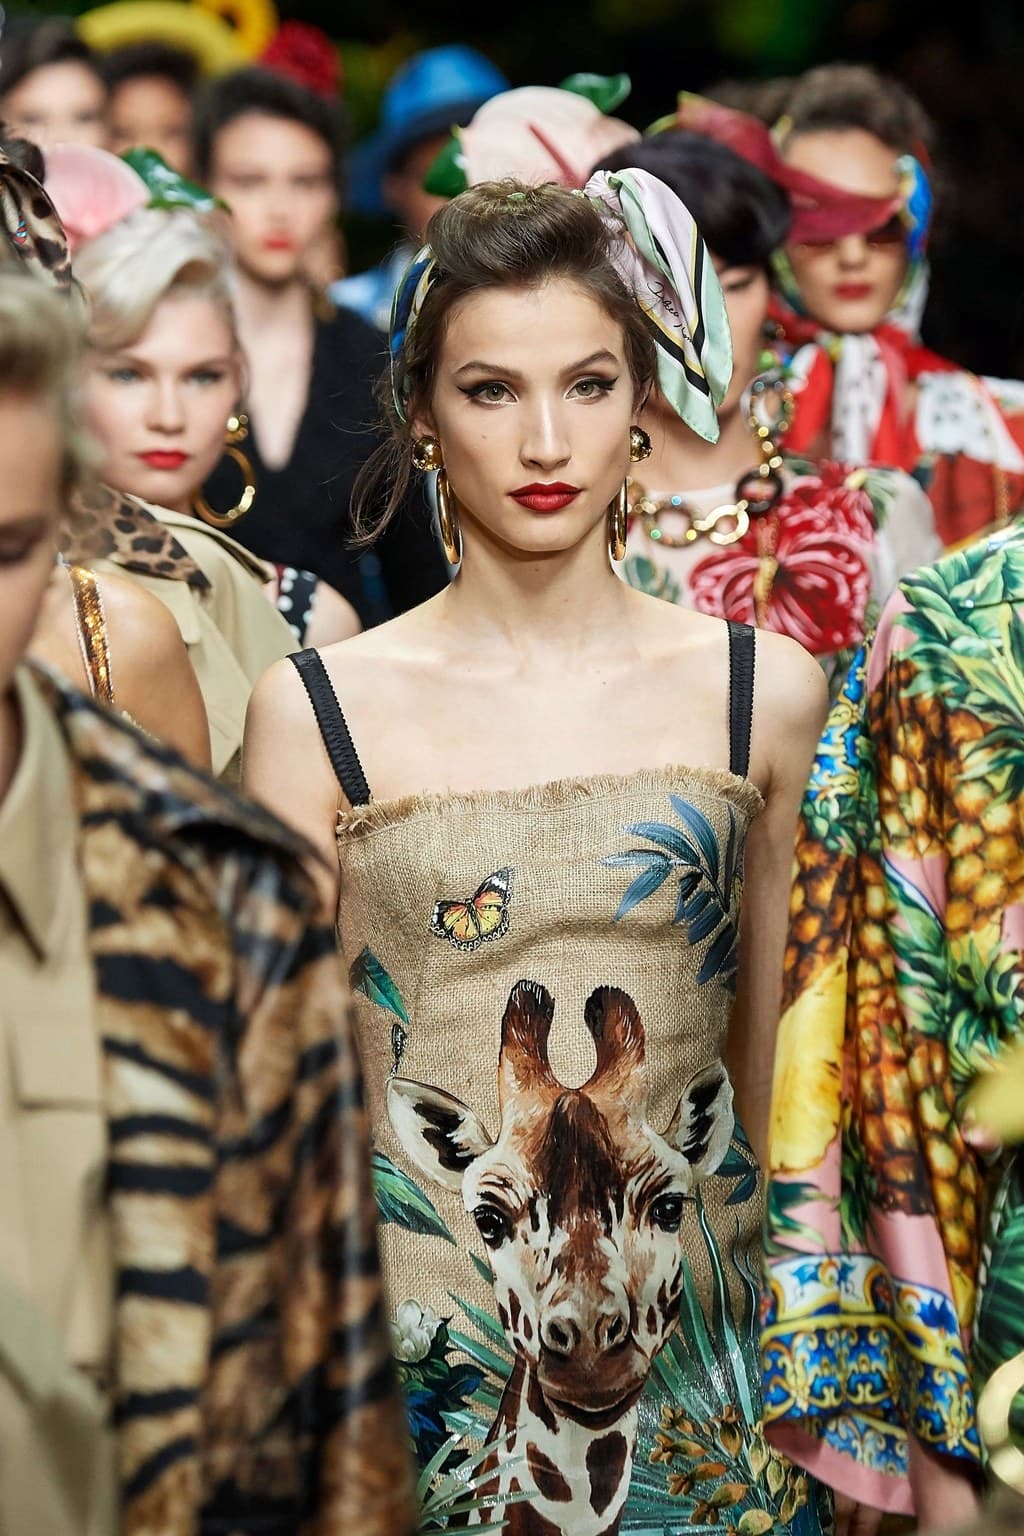 Milan & Sicily Inspire Dolce & Gabbana's Spring Summer 2020 Collection